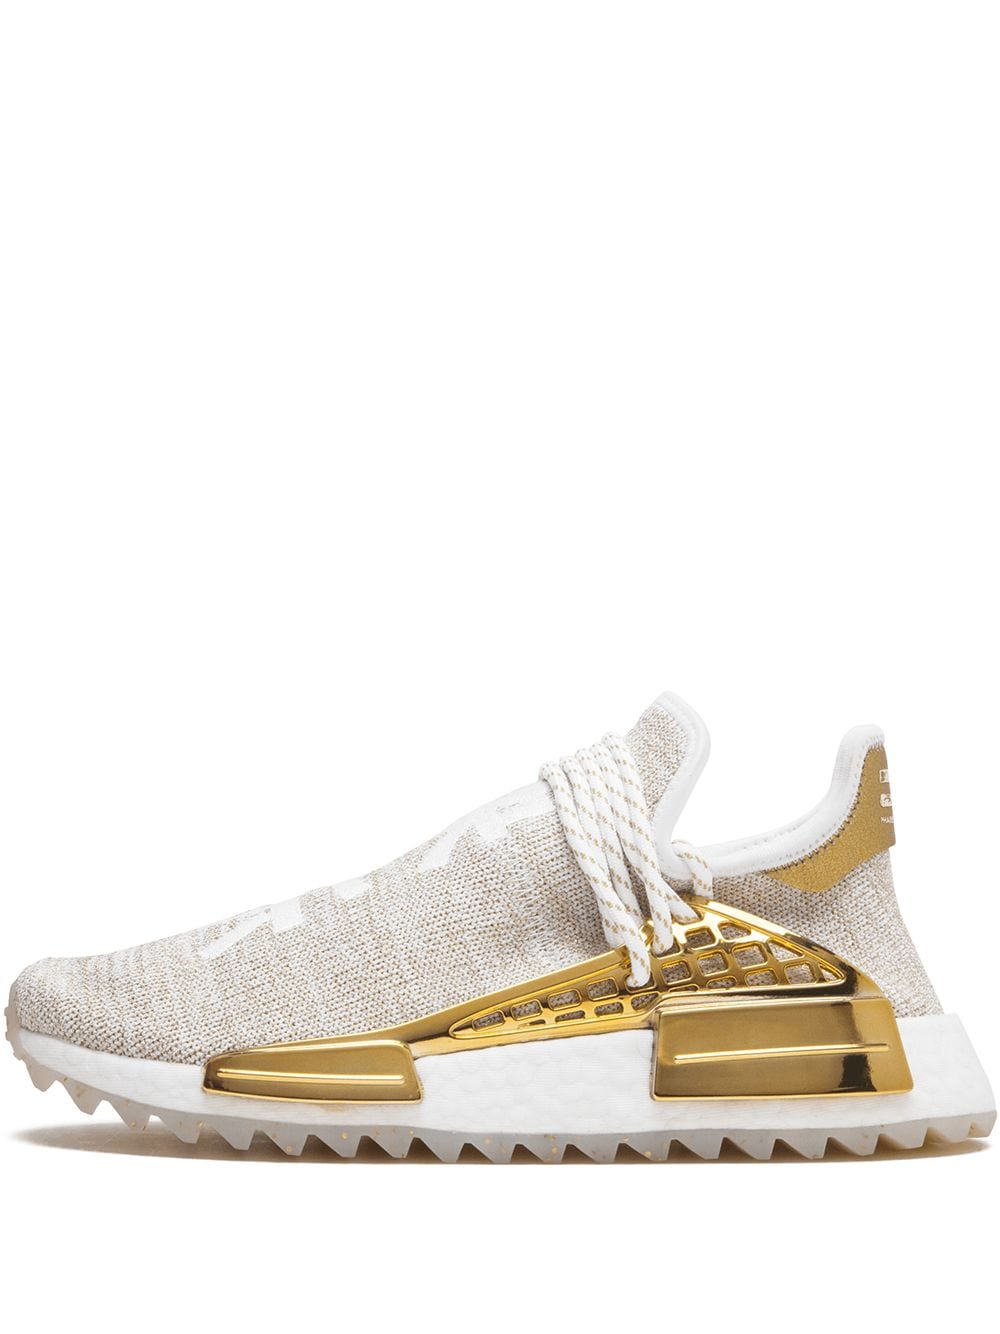 adidas x Pharrell Williams Hu Holi NMD MC "China Exclusive" sneakers - Gold von adidas